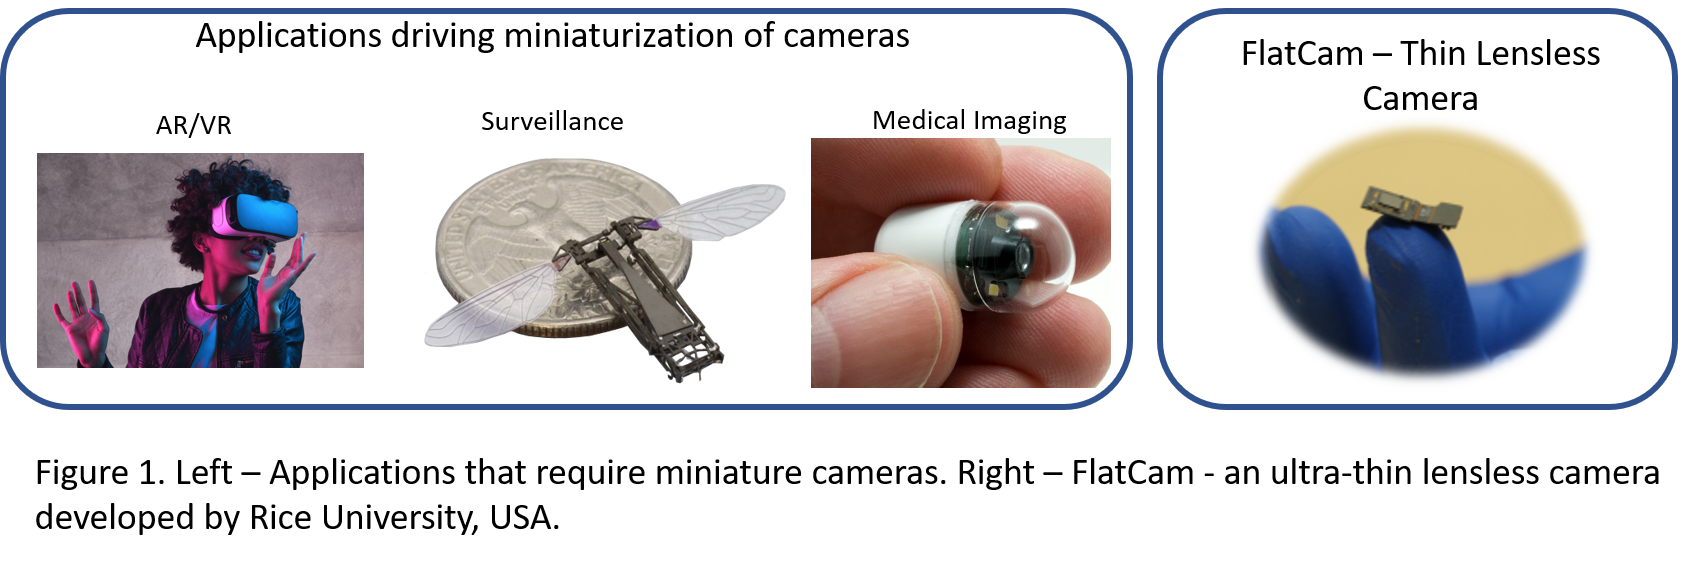 Researchers develop algorithm for lensless, miniature cameras